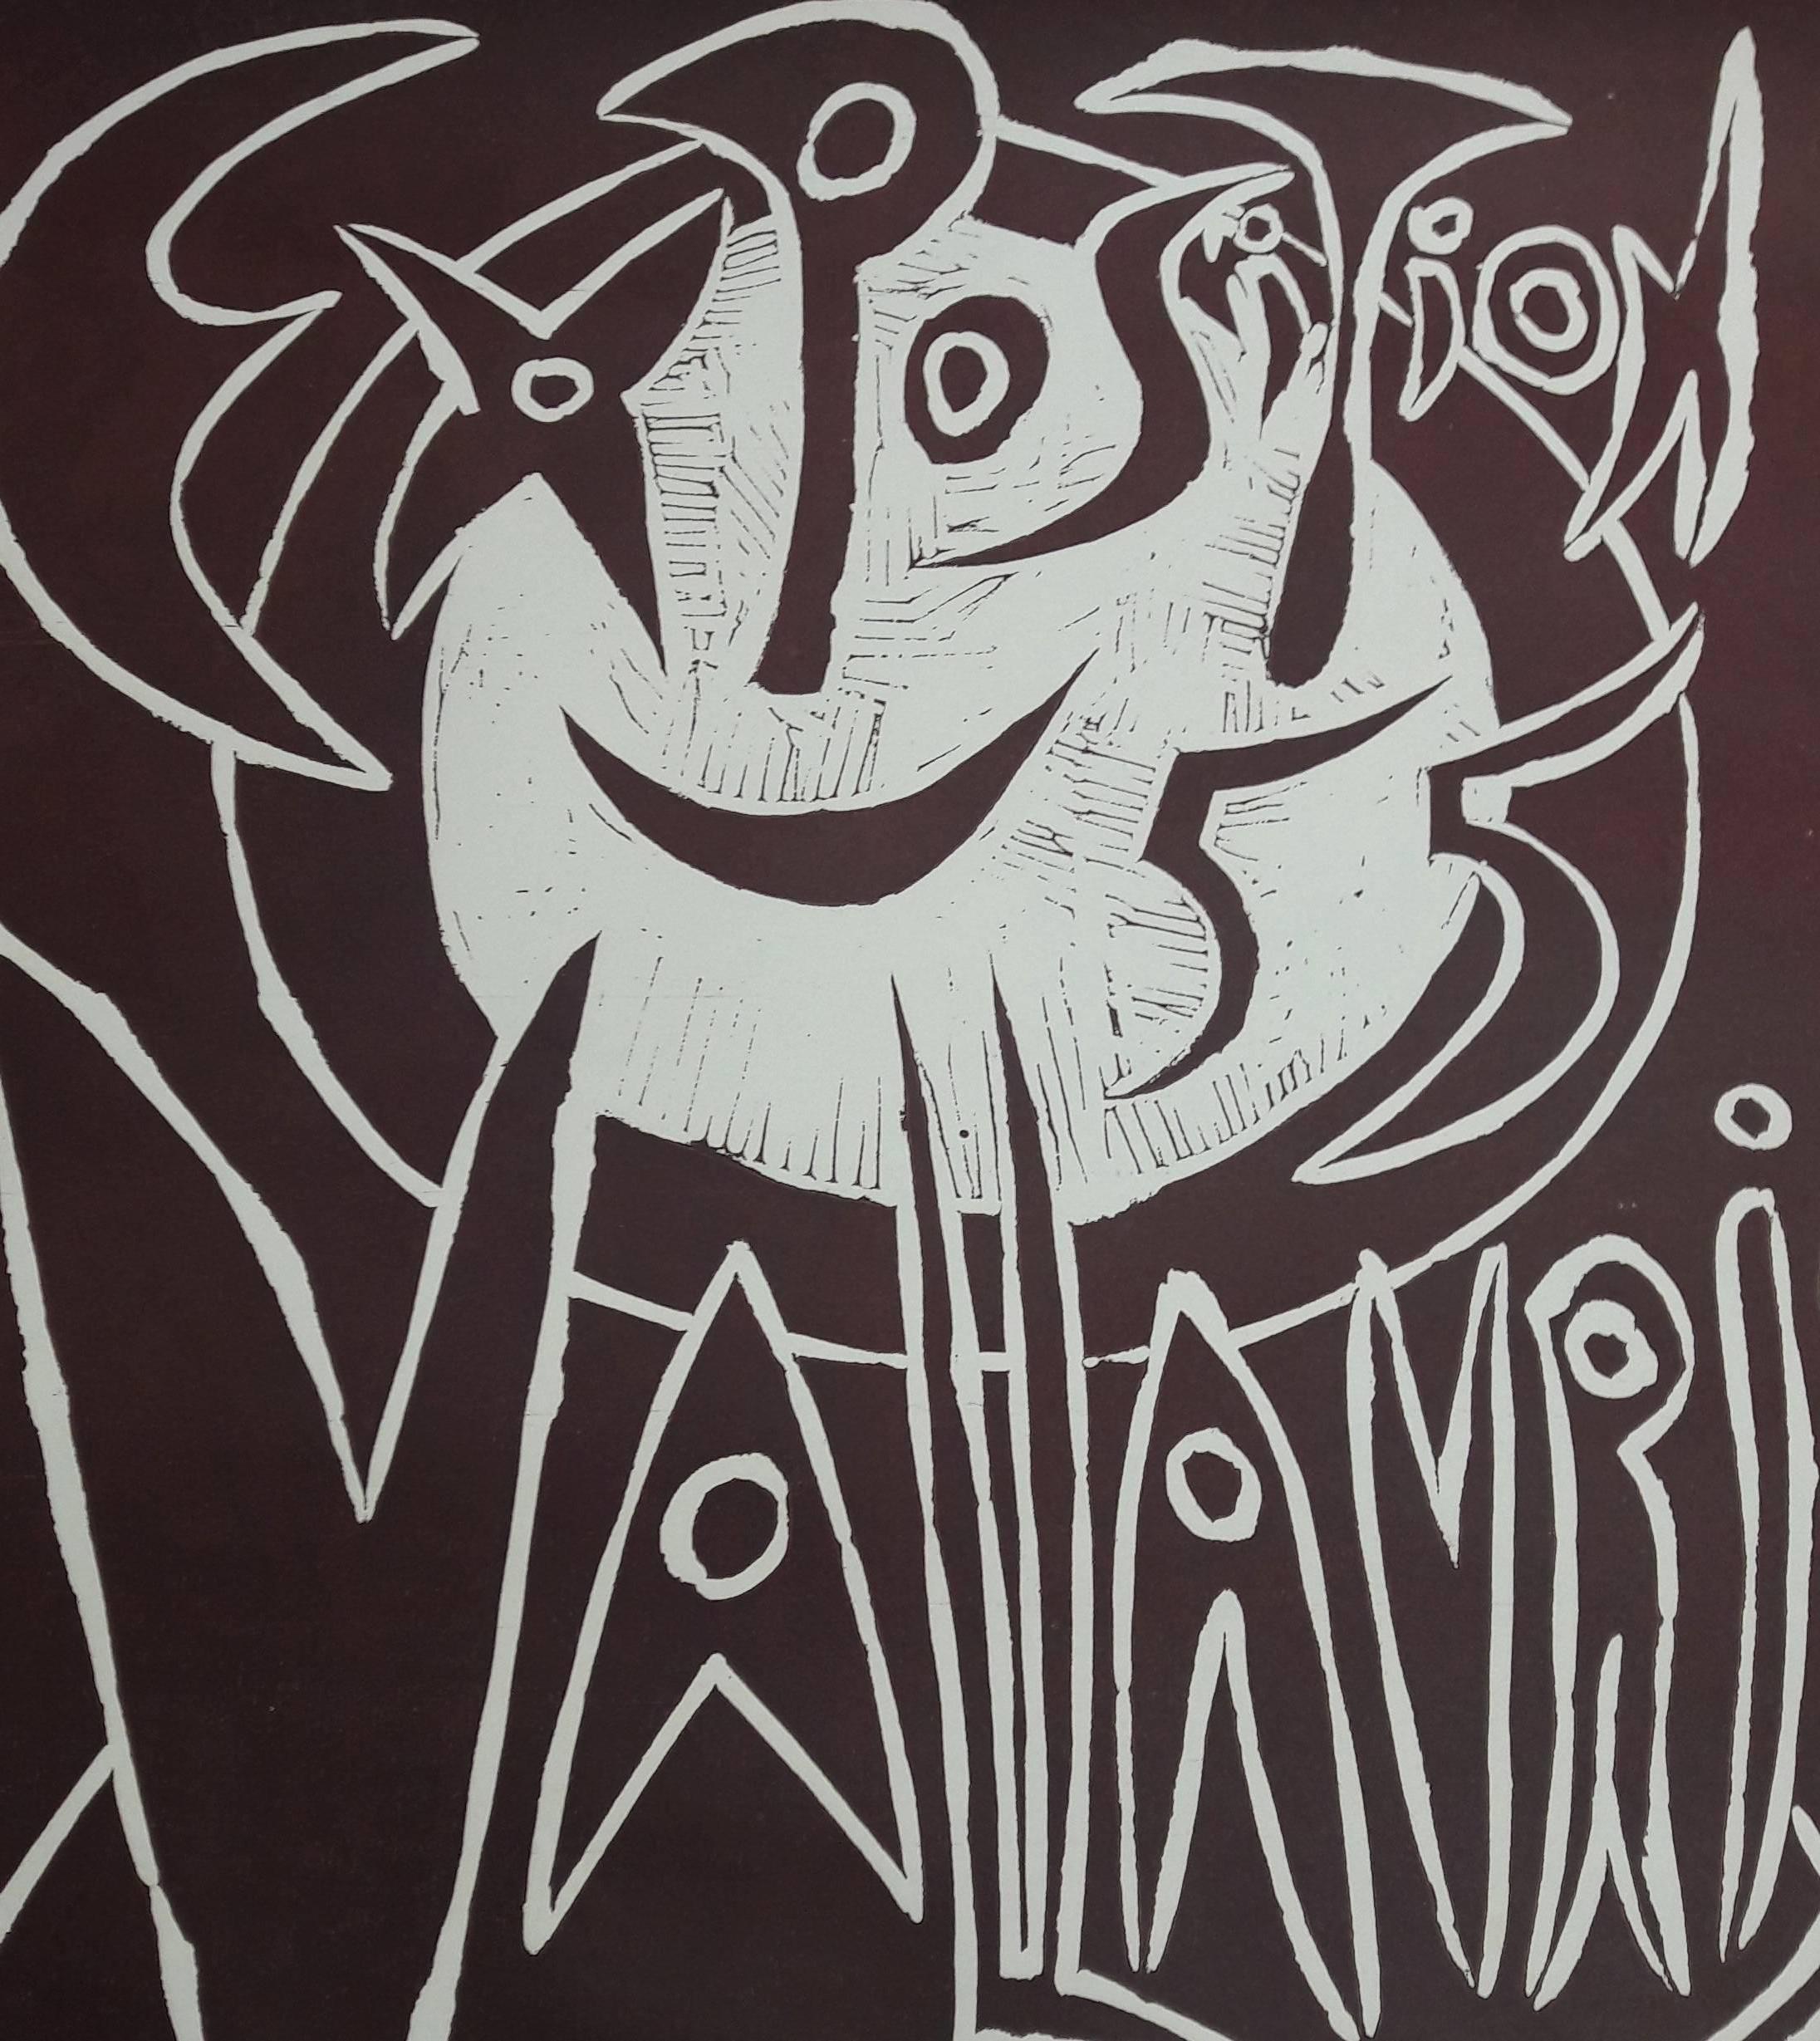 Exposition Vallauris 1955 - Original Linocut  - Cubist Print by Pablo Picasso